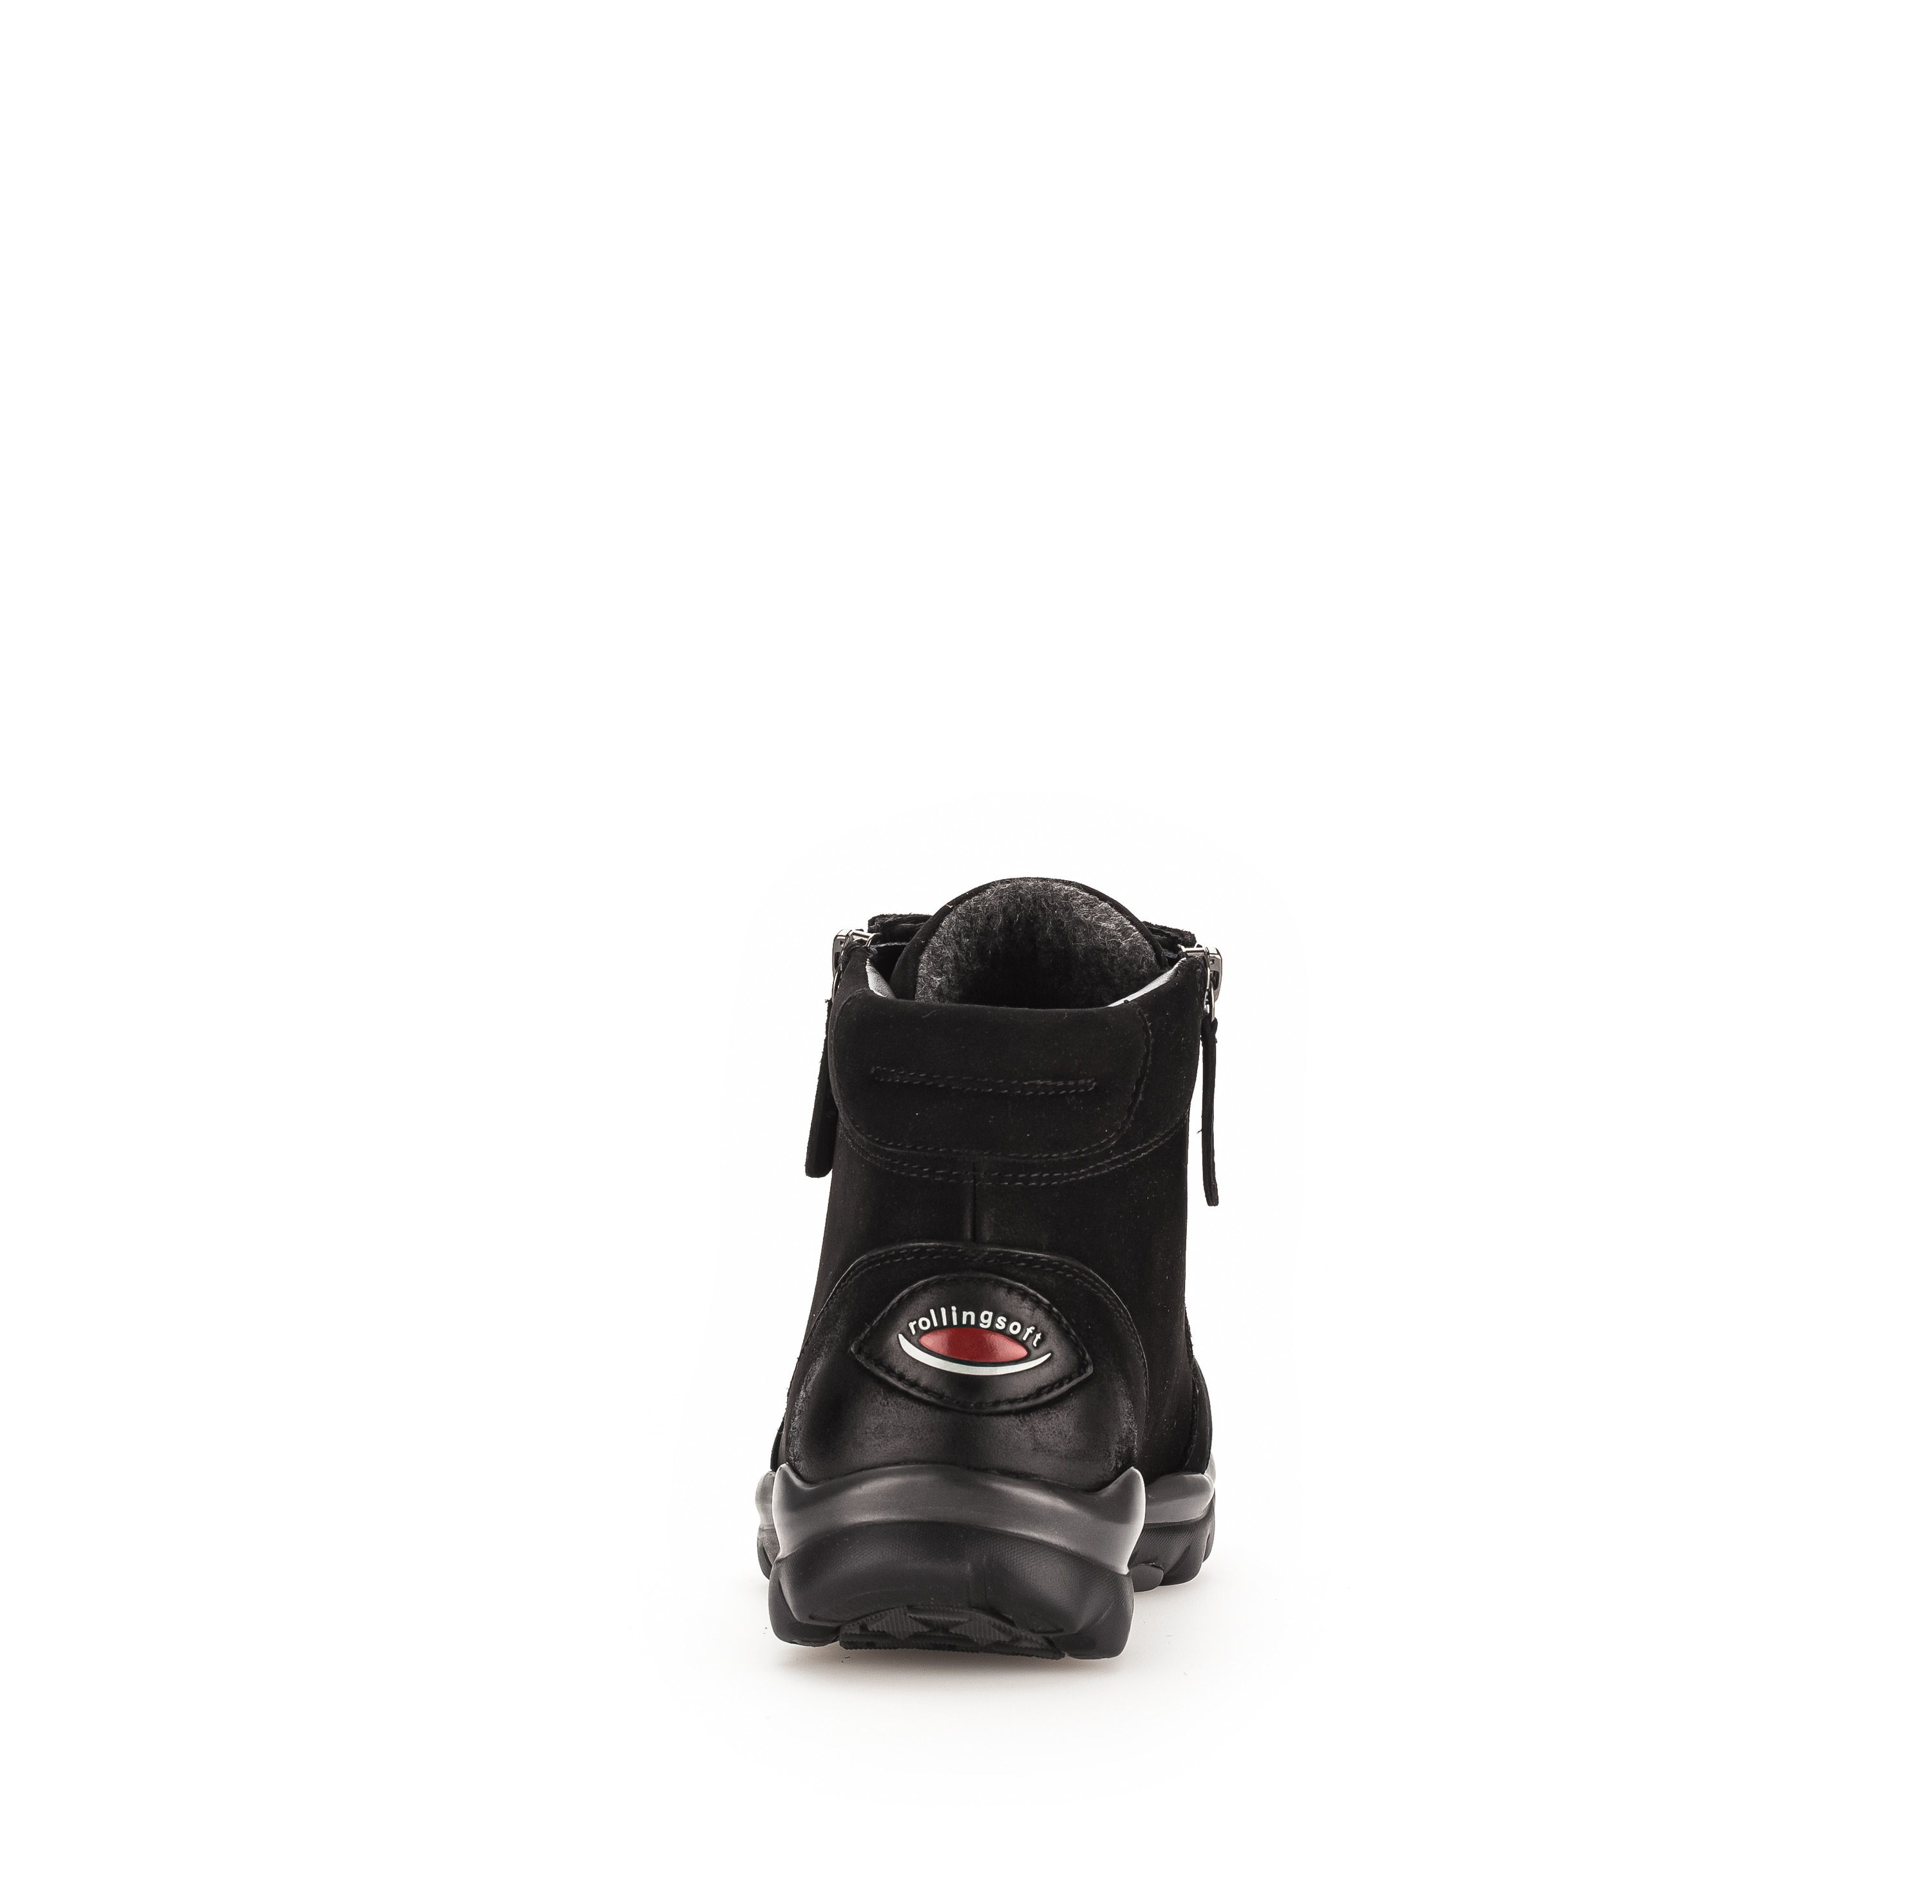 Gabor Shoes Stiefelette - Schwarz Leder